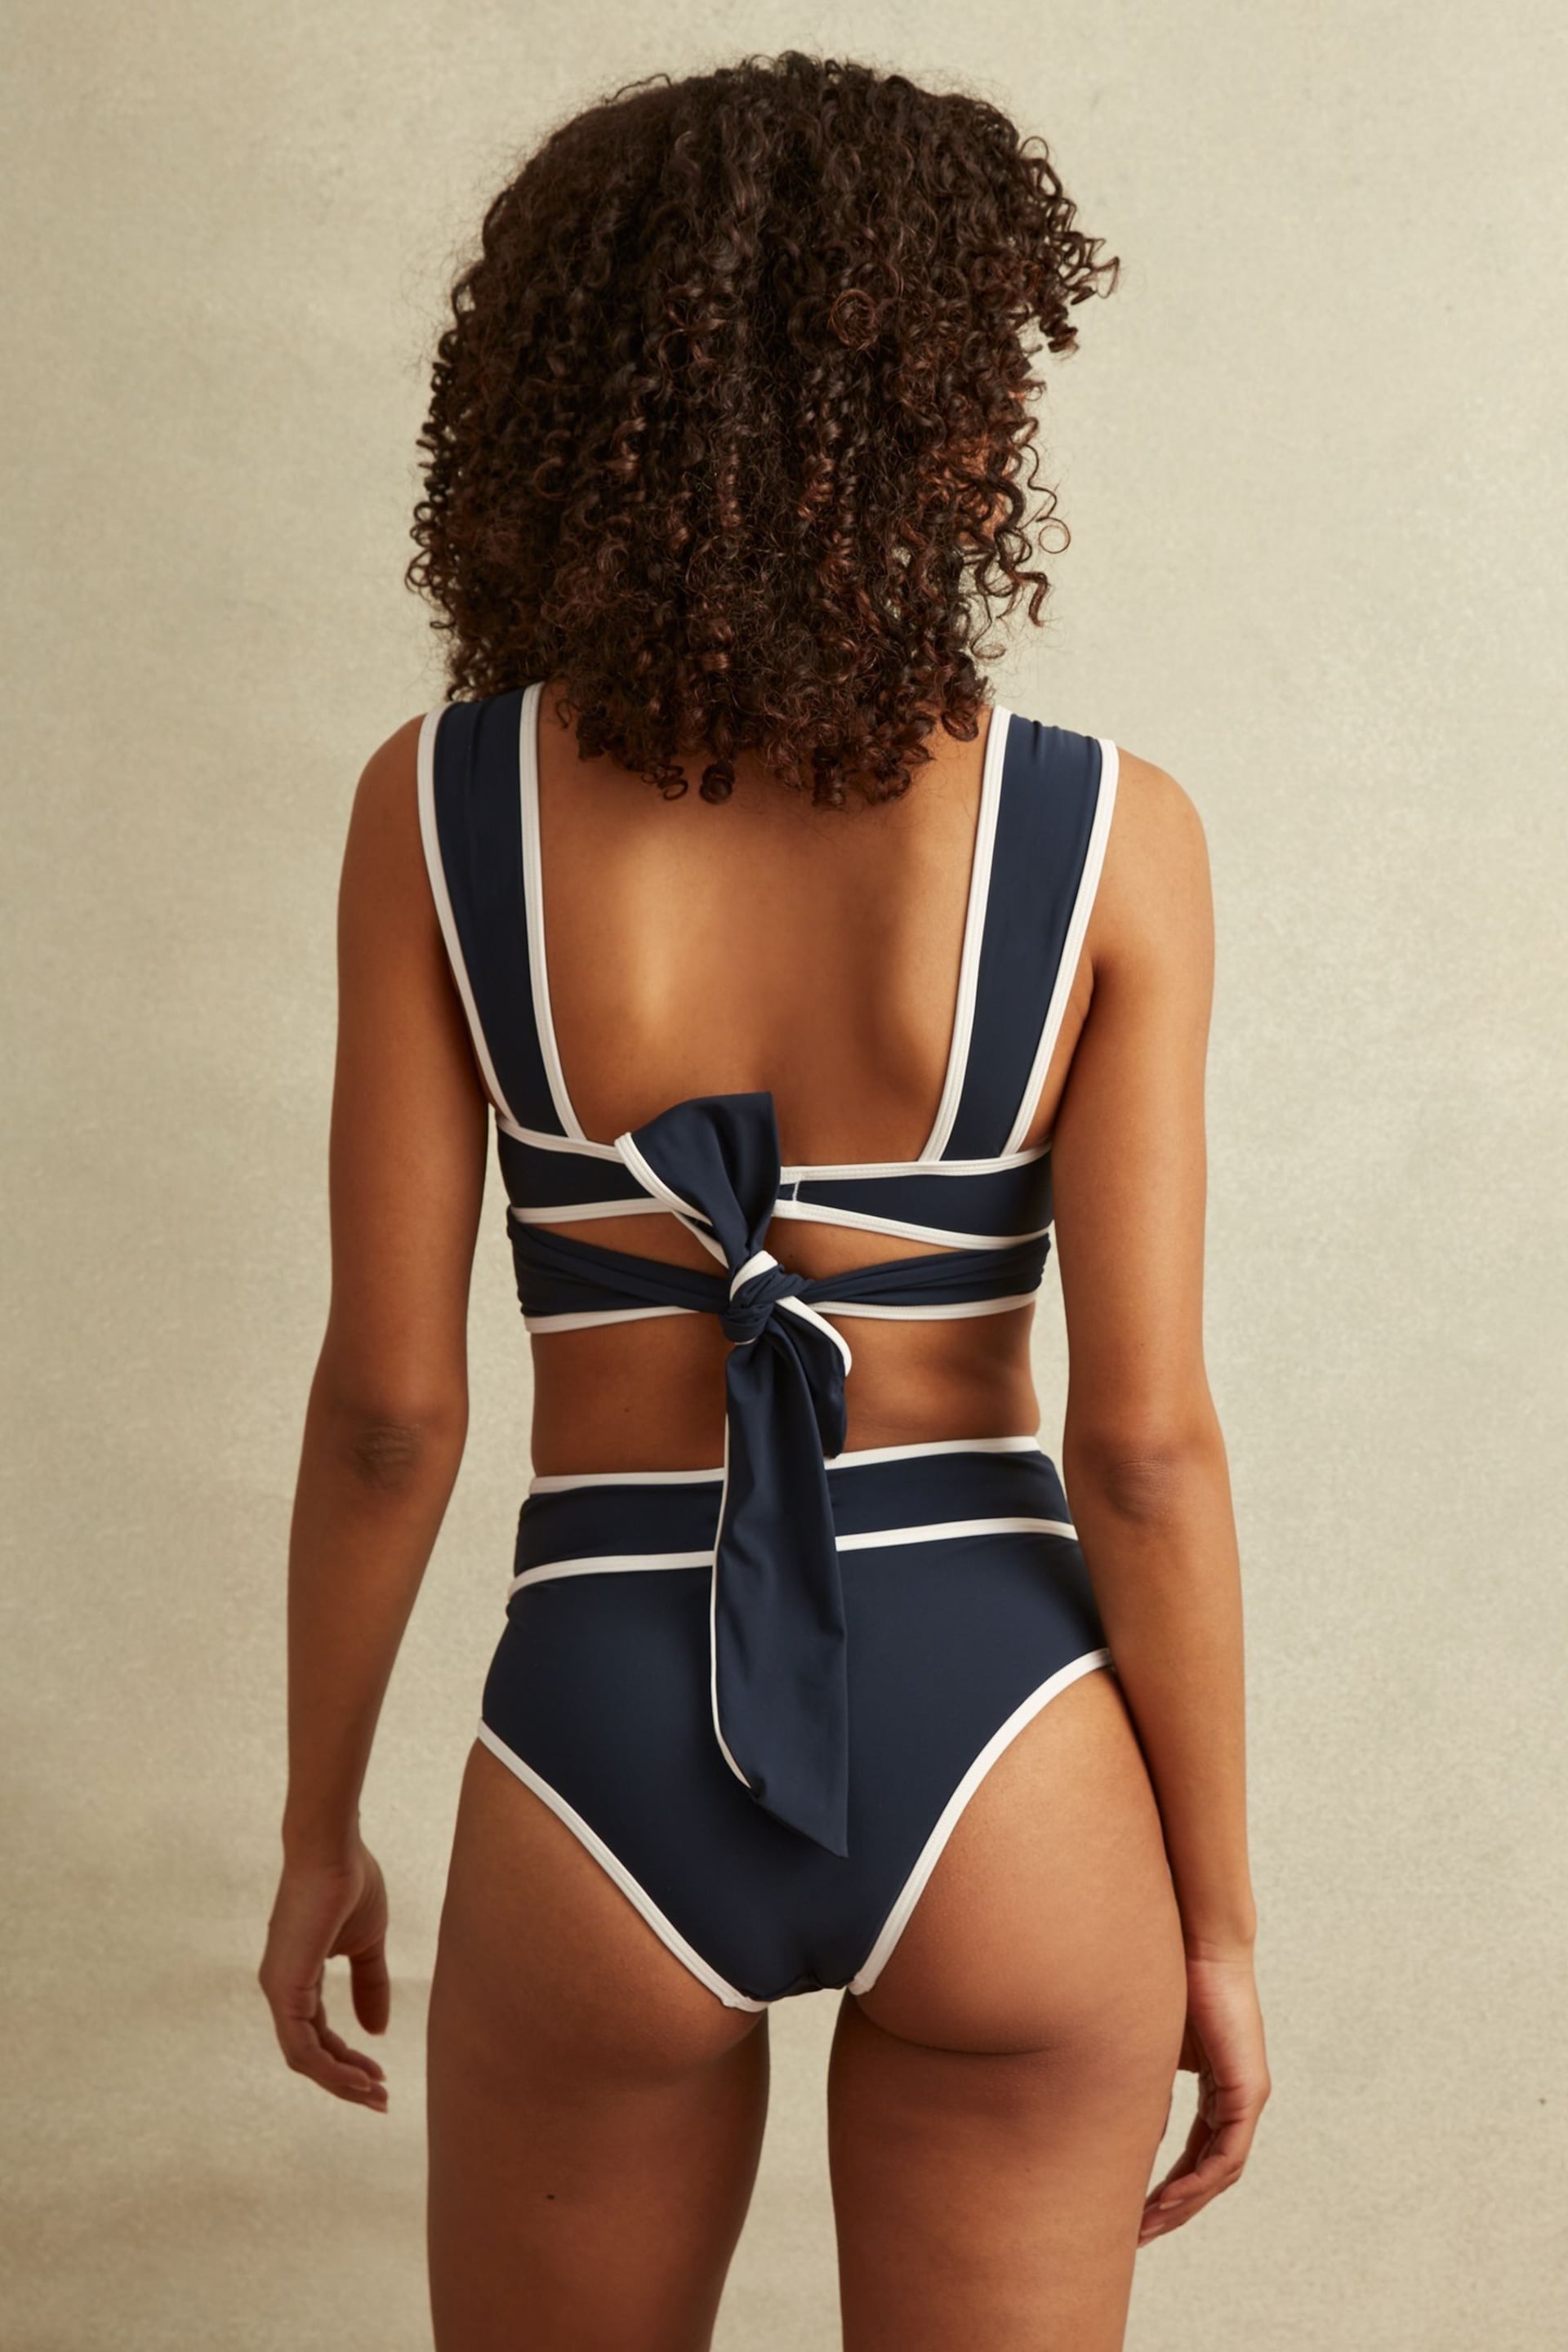 Reiss Navy/White Cristina High Rise Bikini Bottoms - Image 3 of 3